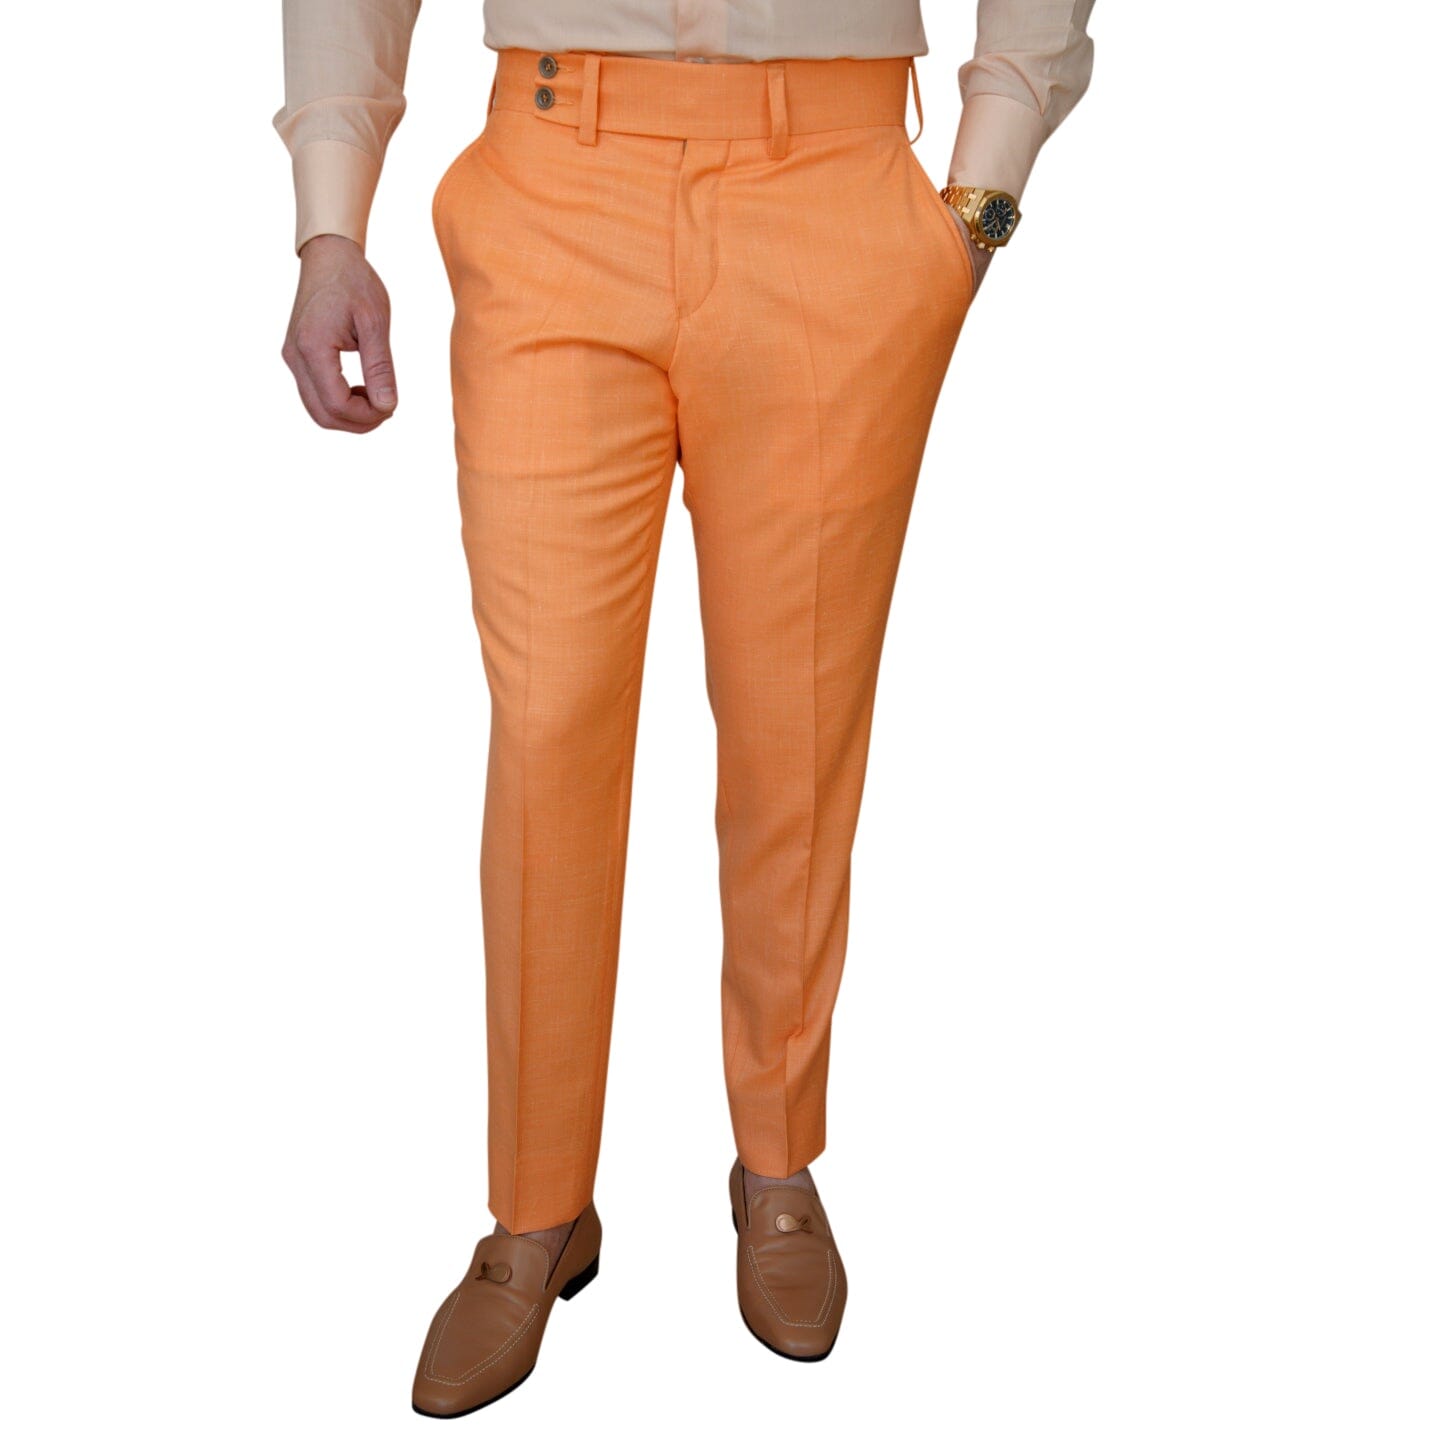 California Peach Hampton Trousers